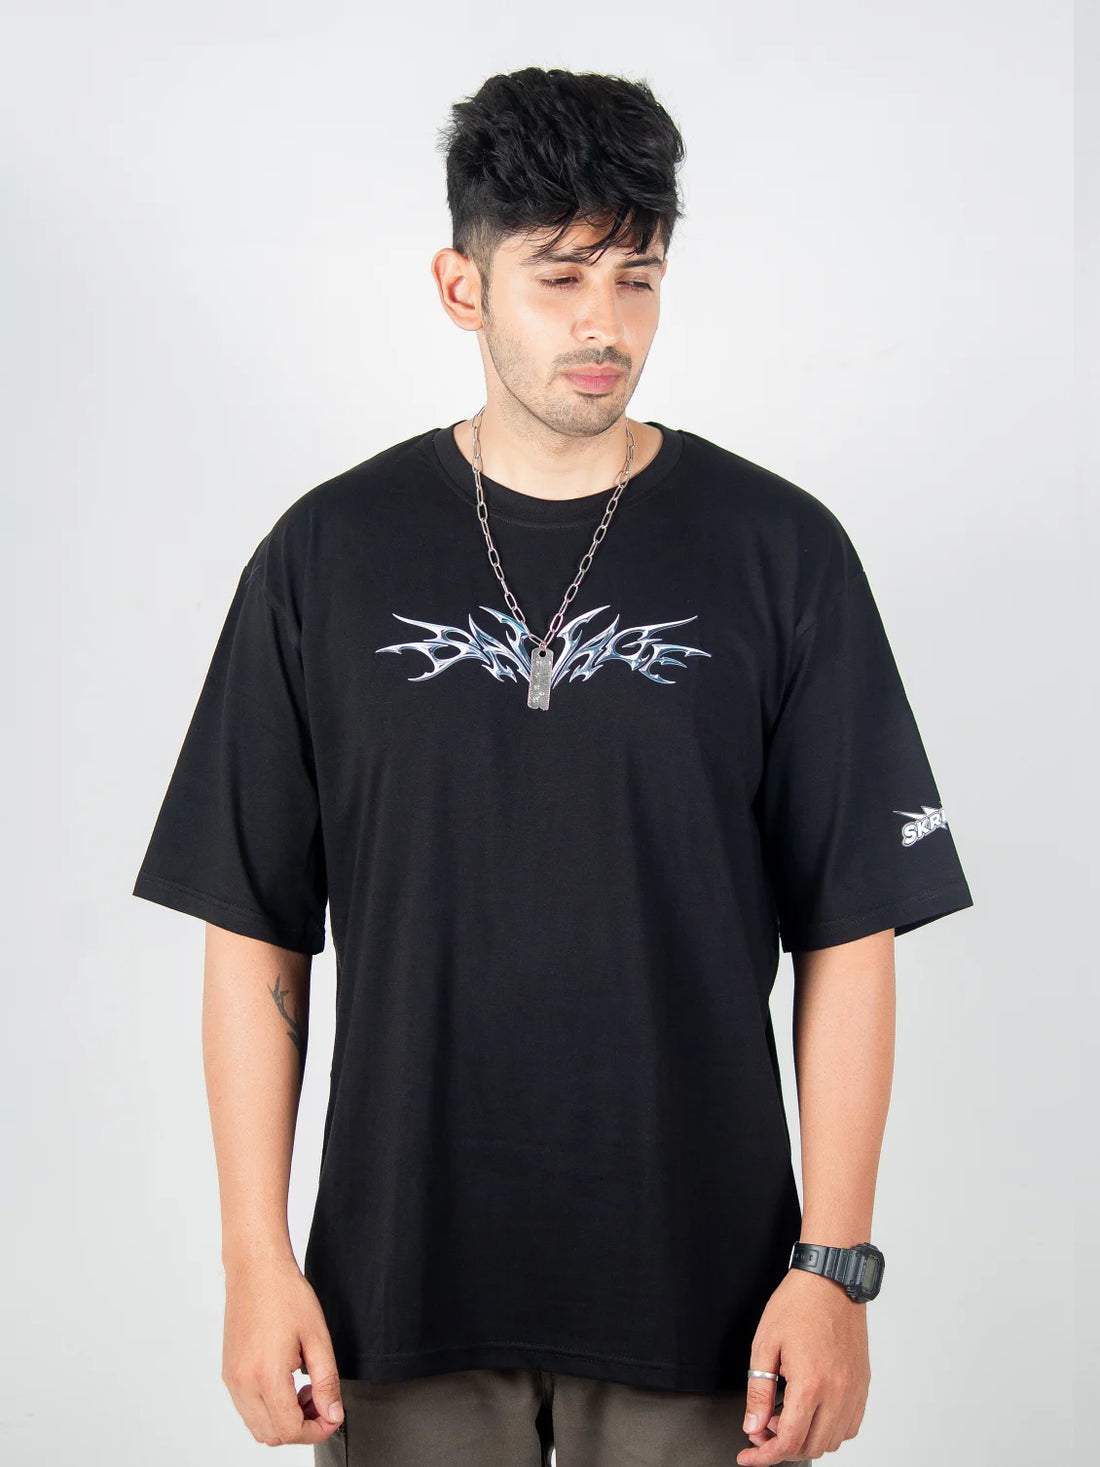 Black oversized t-shirt, savage band metal y2k print, skream streetwear t-shirt 